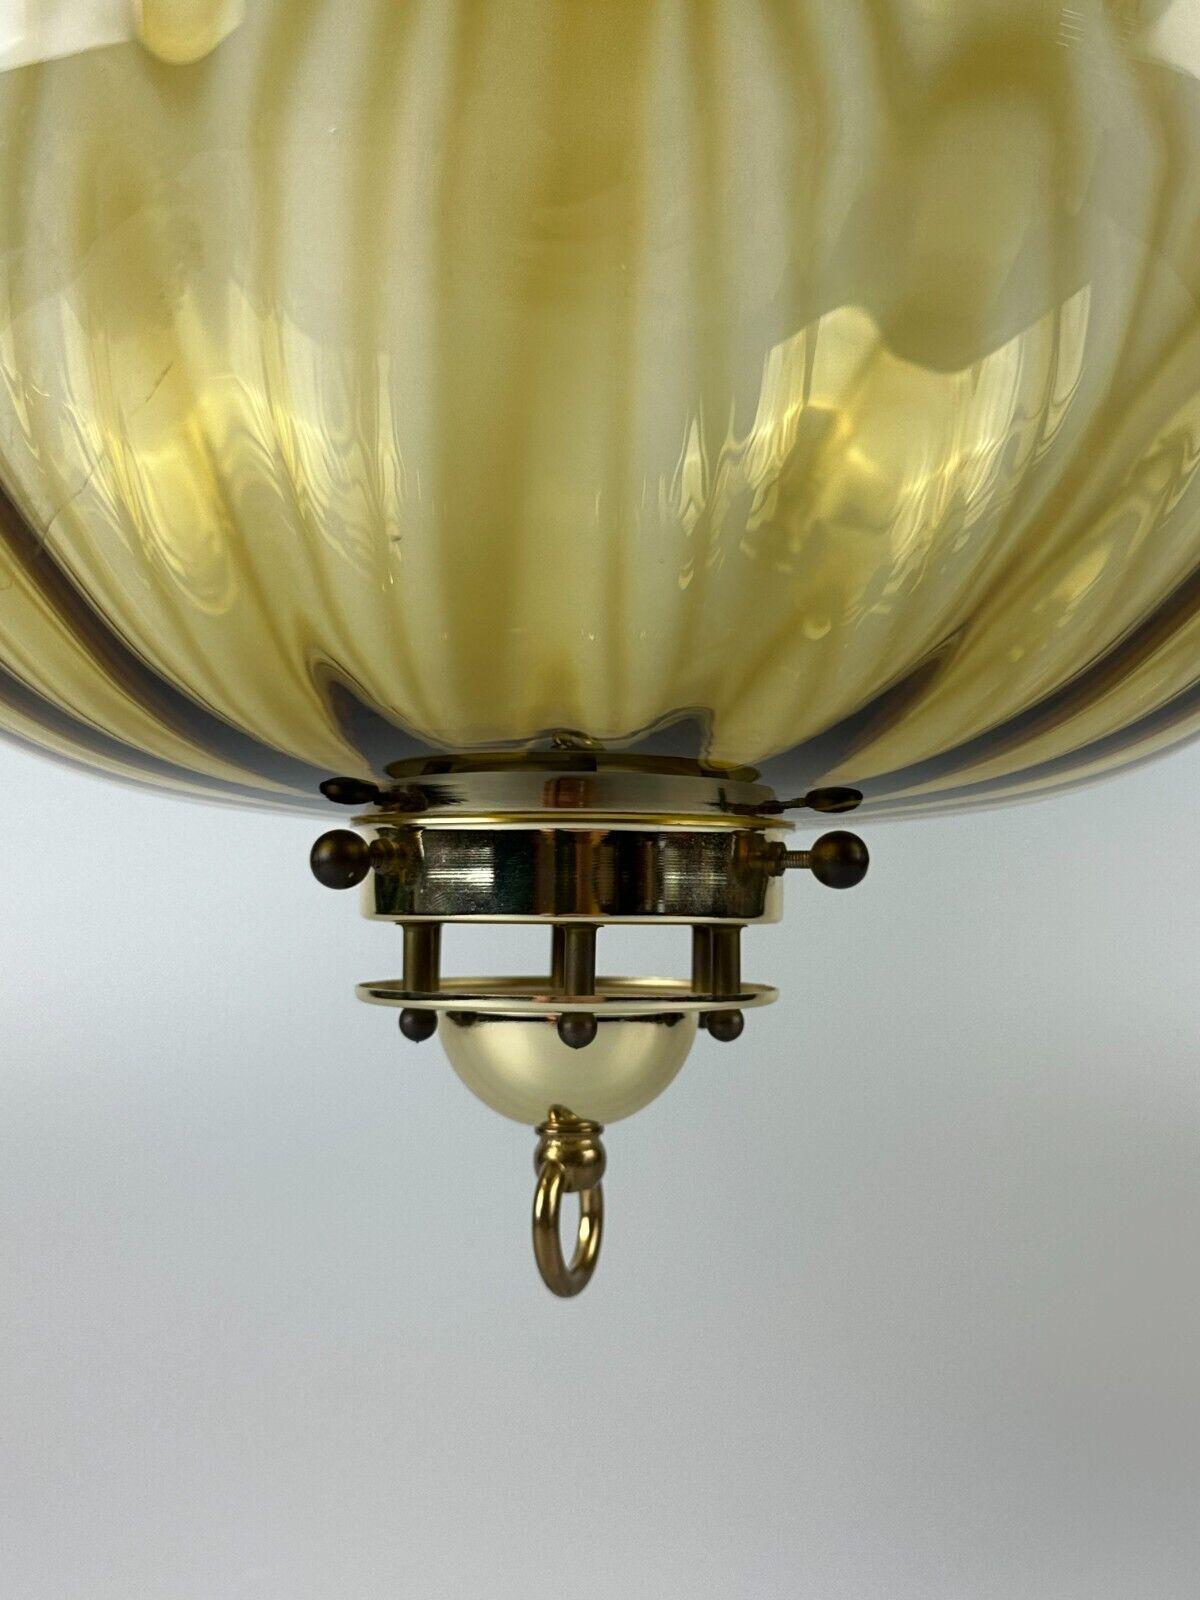 60s hanging lamp